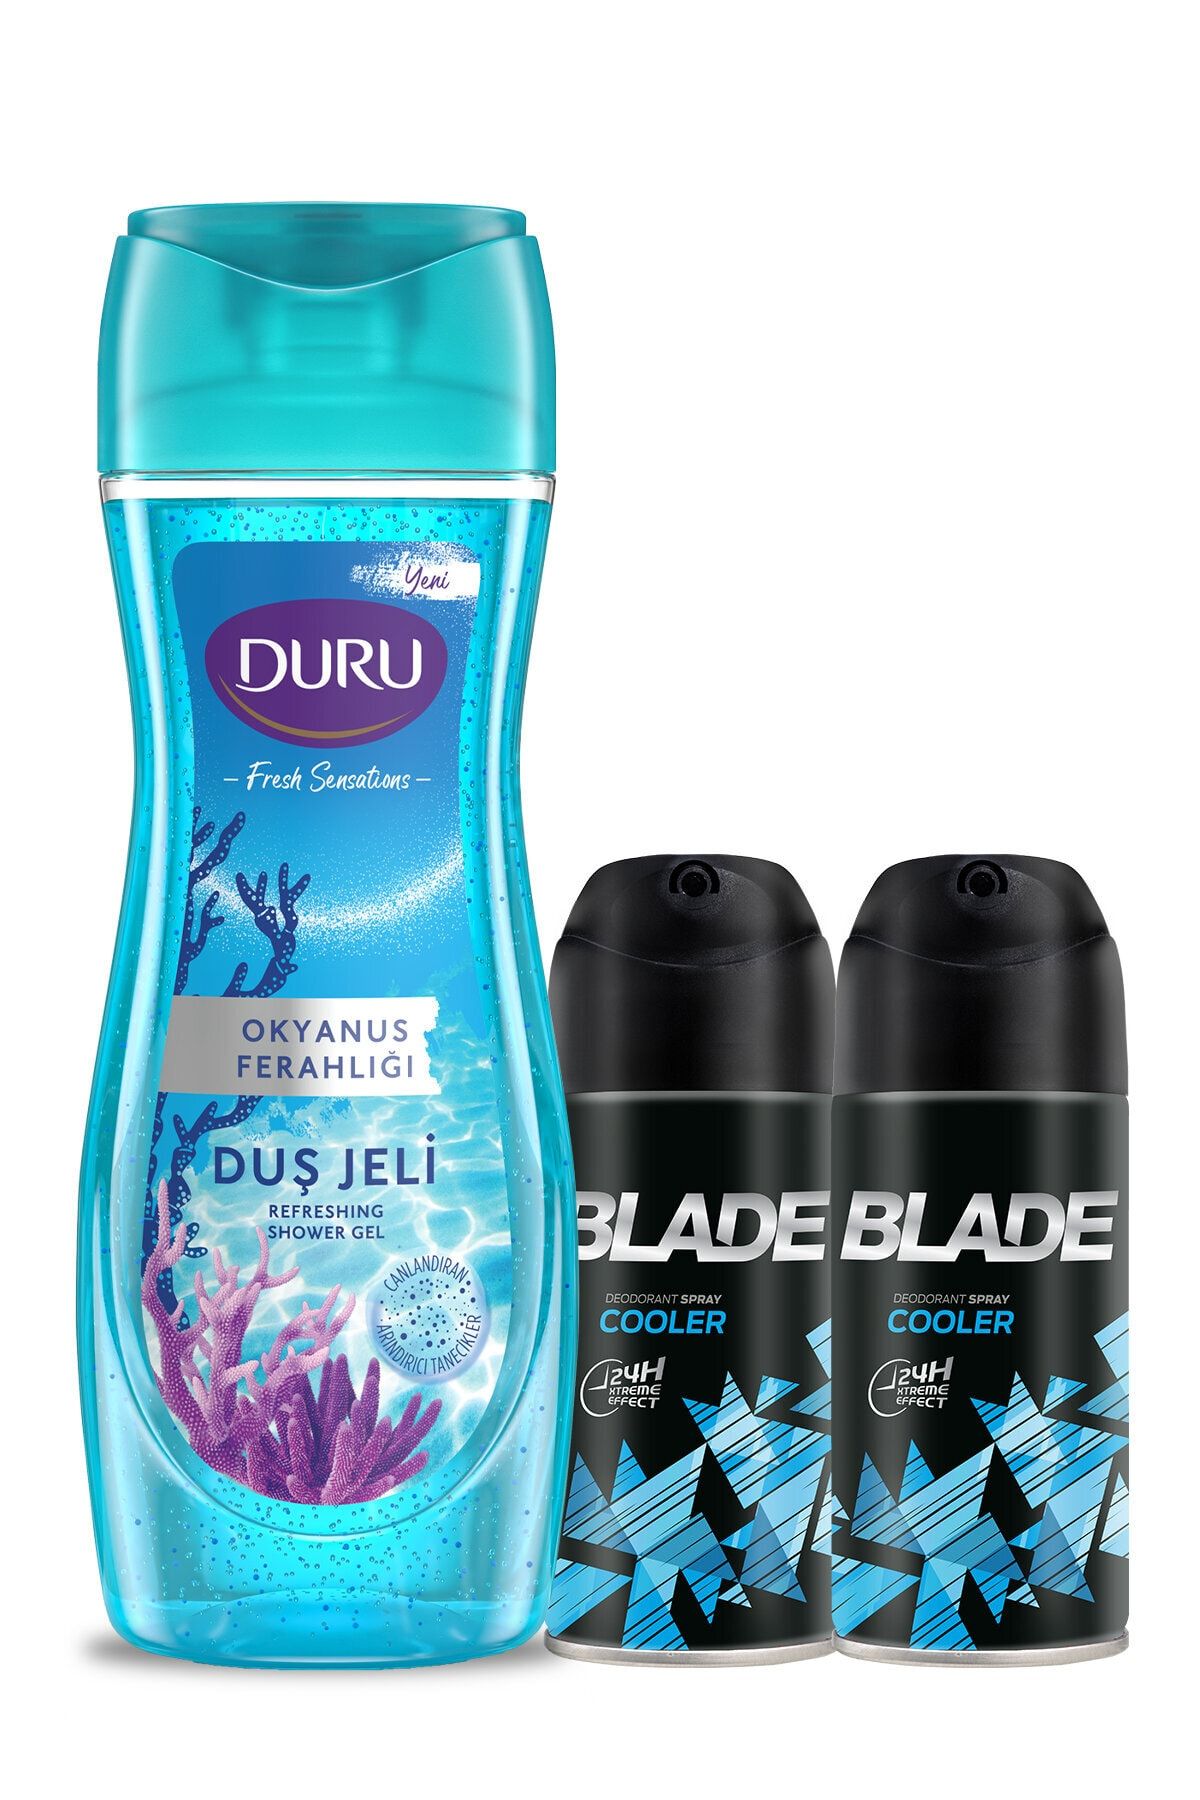 Duru Fresh Sensations Okyanus Ferahlığı Duş Jeli 450ml Ve Blade Cooler Erkek Deodorant 2 X 150ml